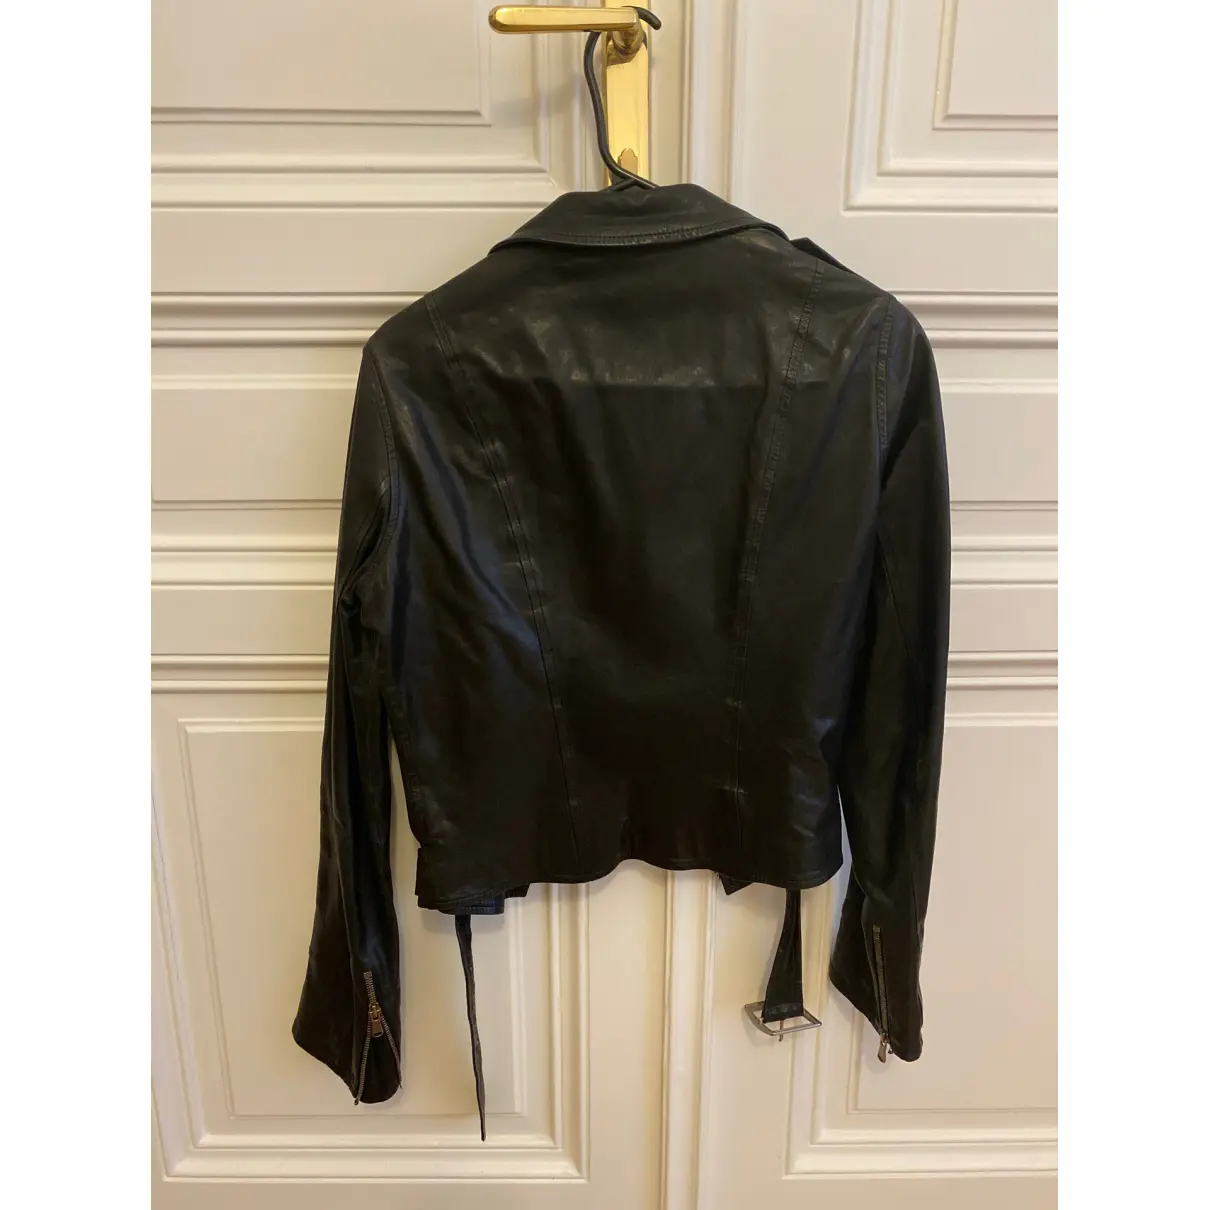 Buy Hugo Boss Leather biker jacket online